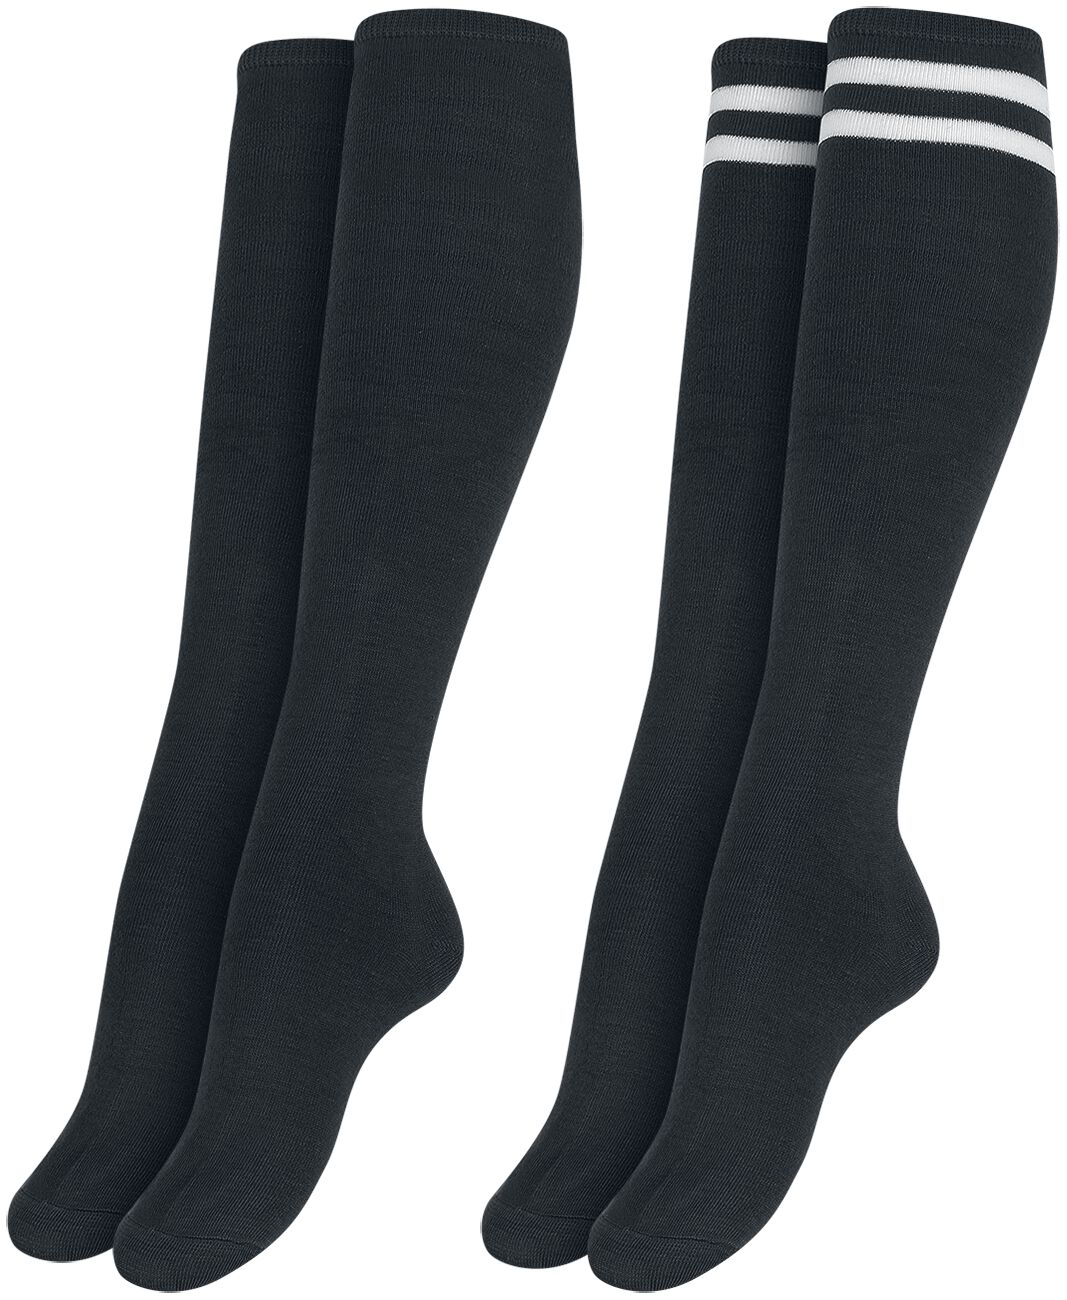 Urban Classics Kniestrümpfe - Ladies College Socks 2-Pack - EU35-38 bis EU39-42 - für Damen - Größe EU 35-38 - schwarz